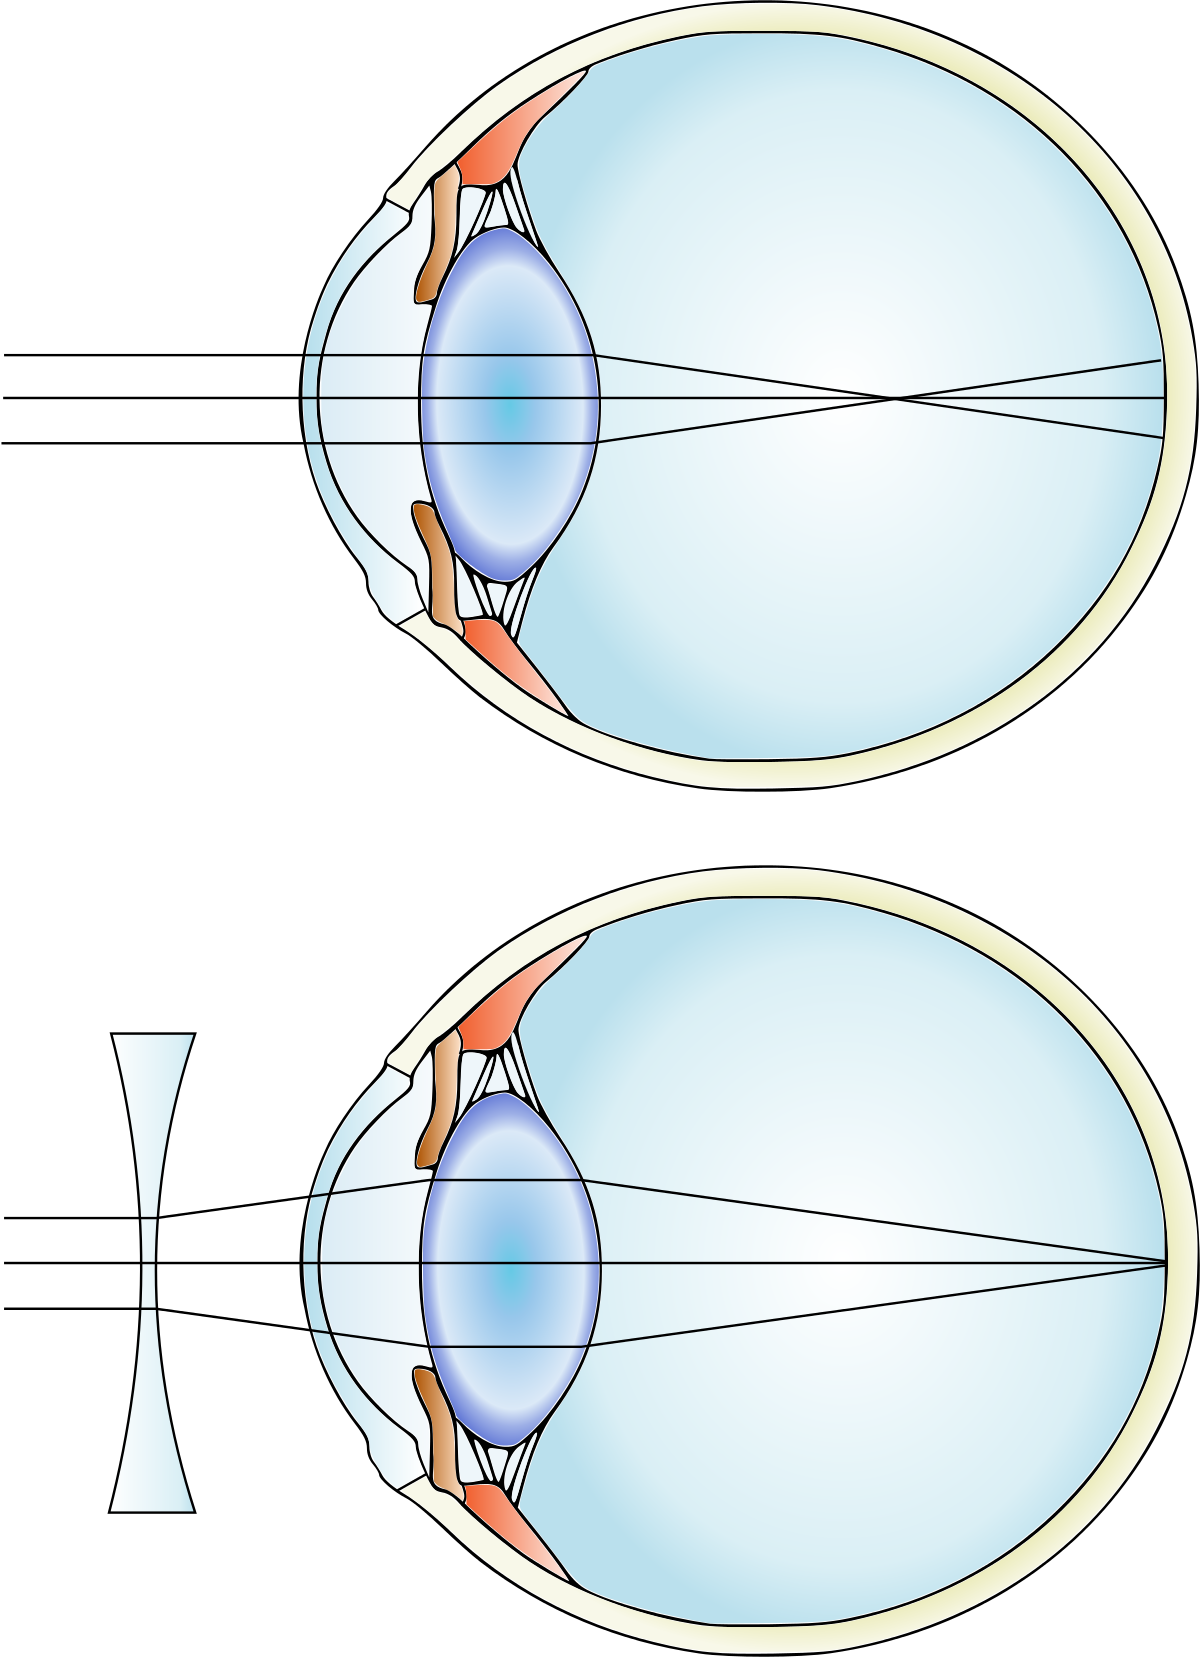 myopia kevesebb, mint 2 dioptria